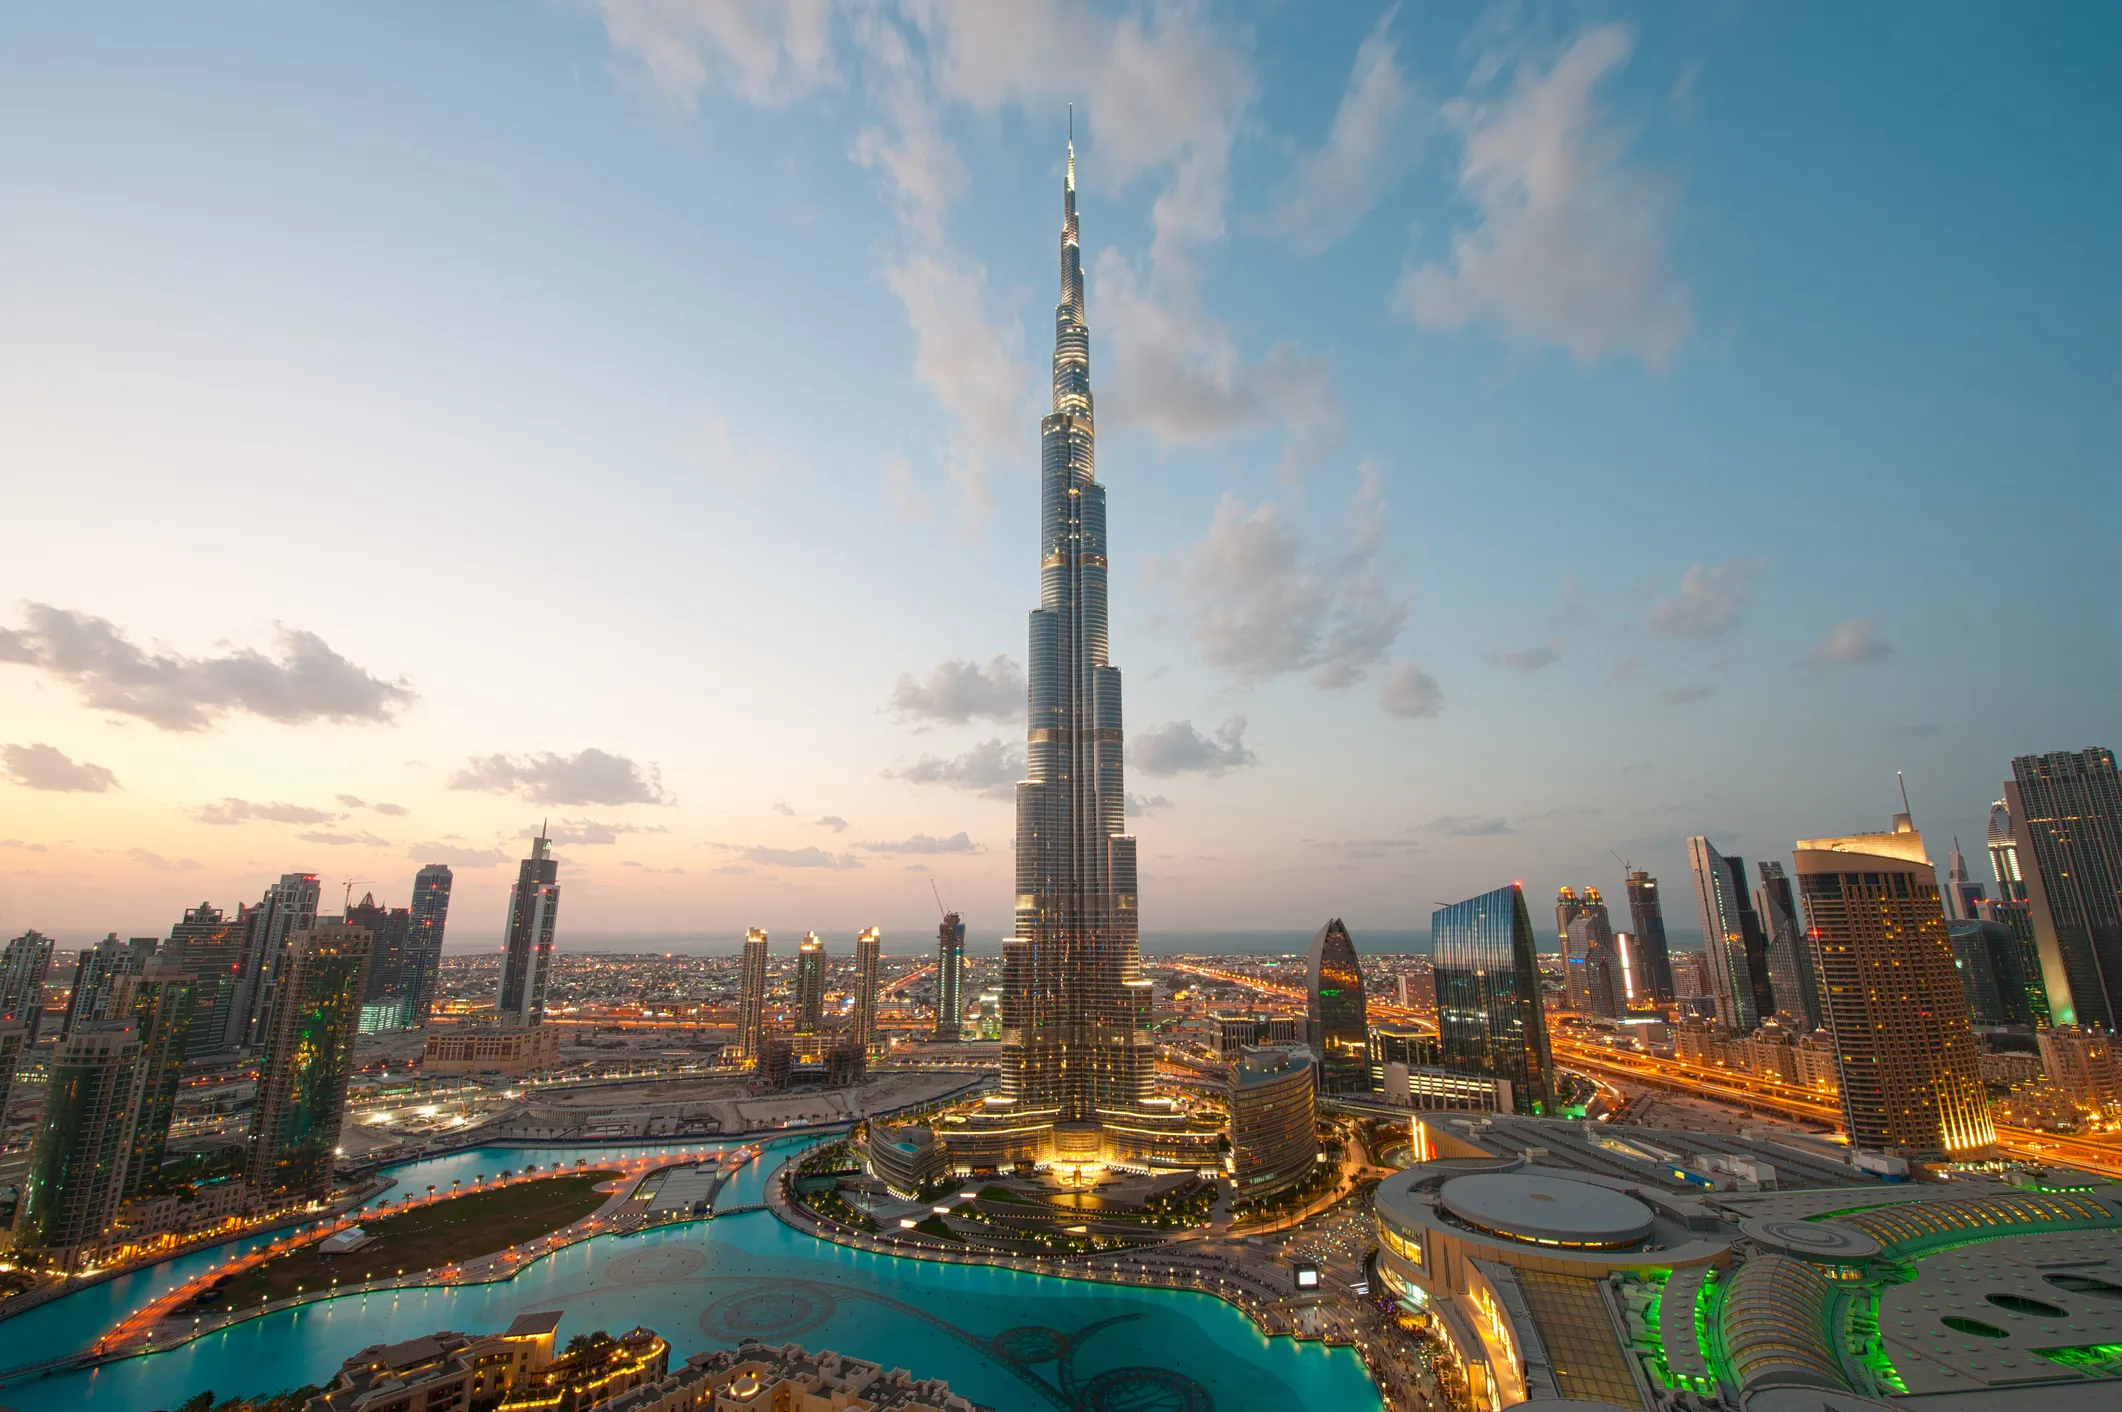 Burj Khalifa: Iconic Global Landmark